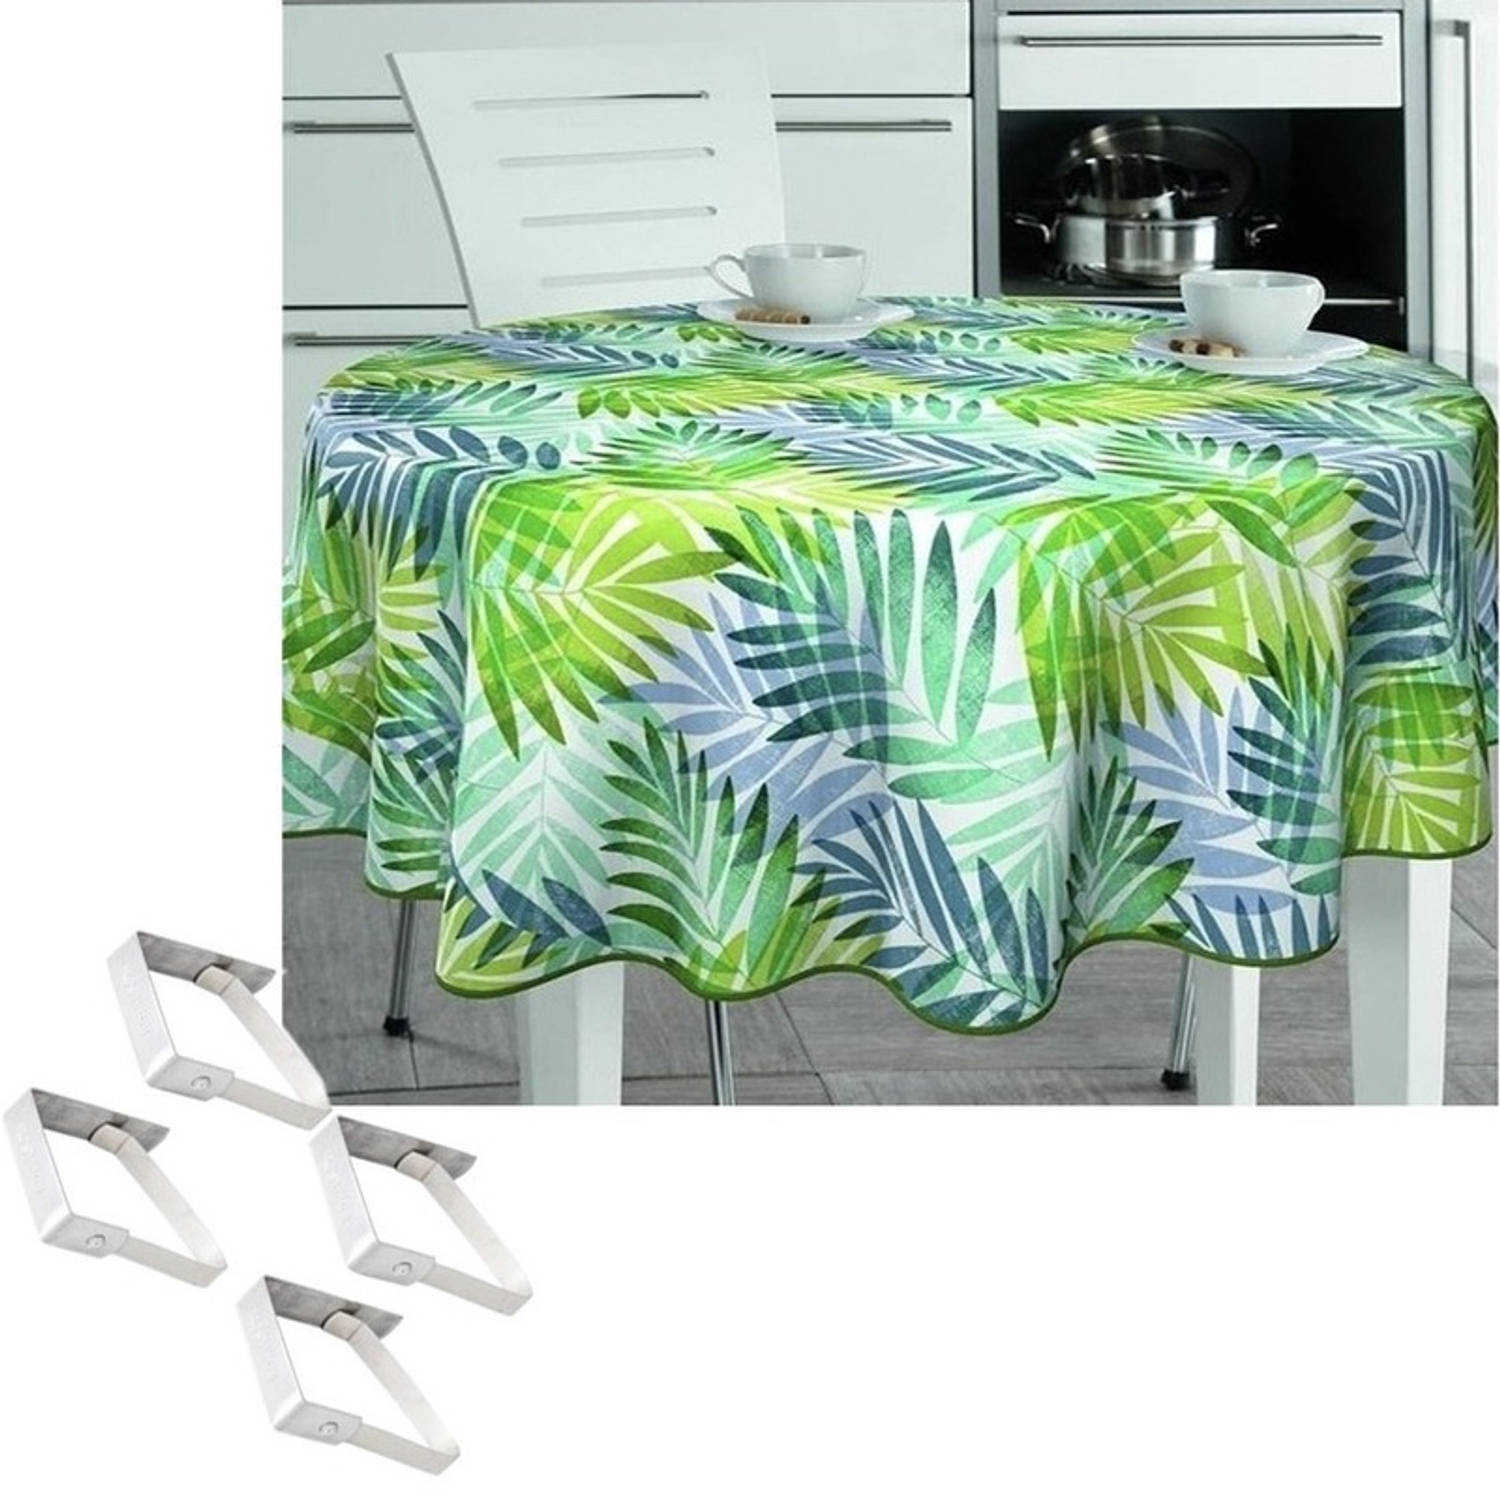 Oeps visie Overtreffen Tafelkleed/tafelzeil palmbladeren 160 cm rond met 4 klemmen - Tafelzeilen |  Blokker